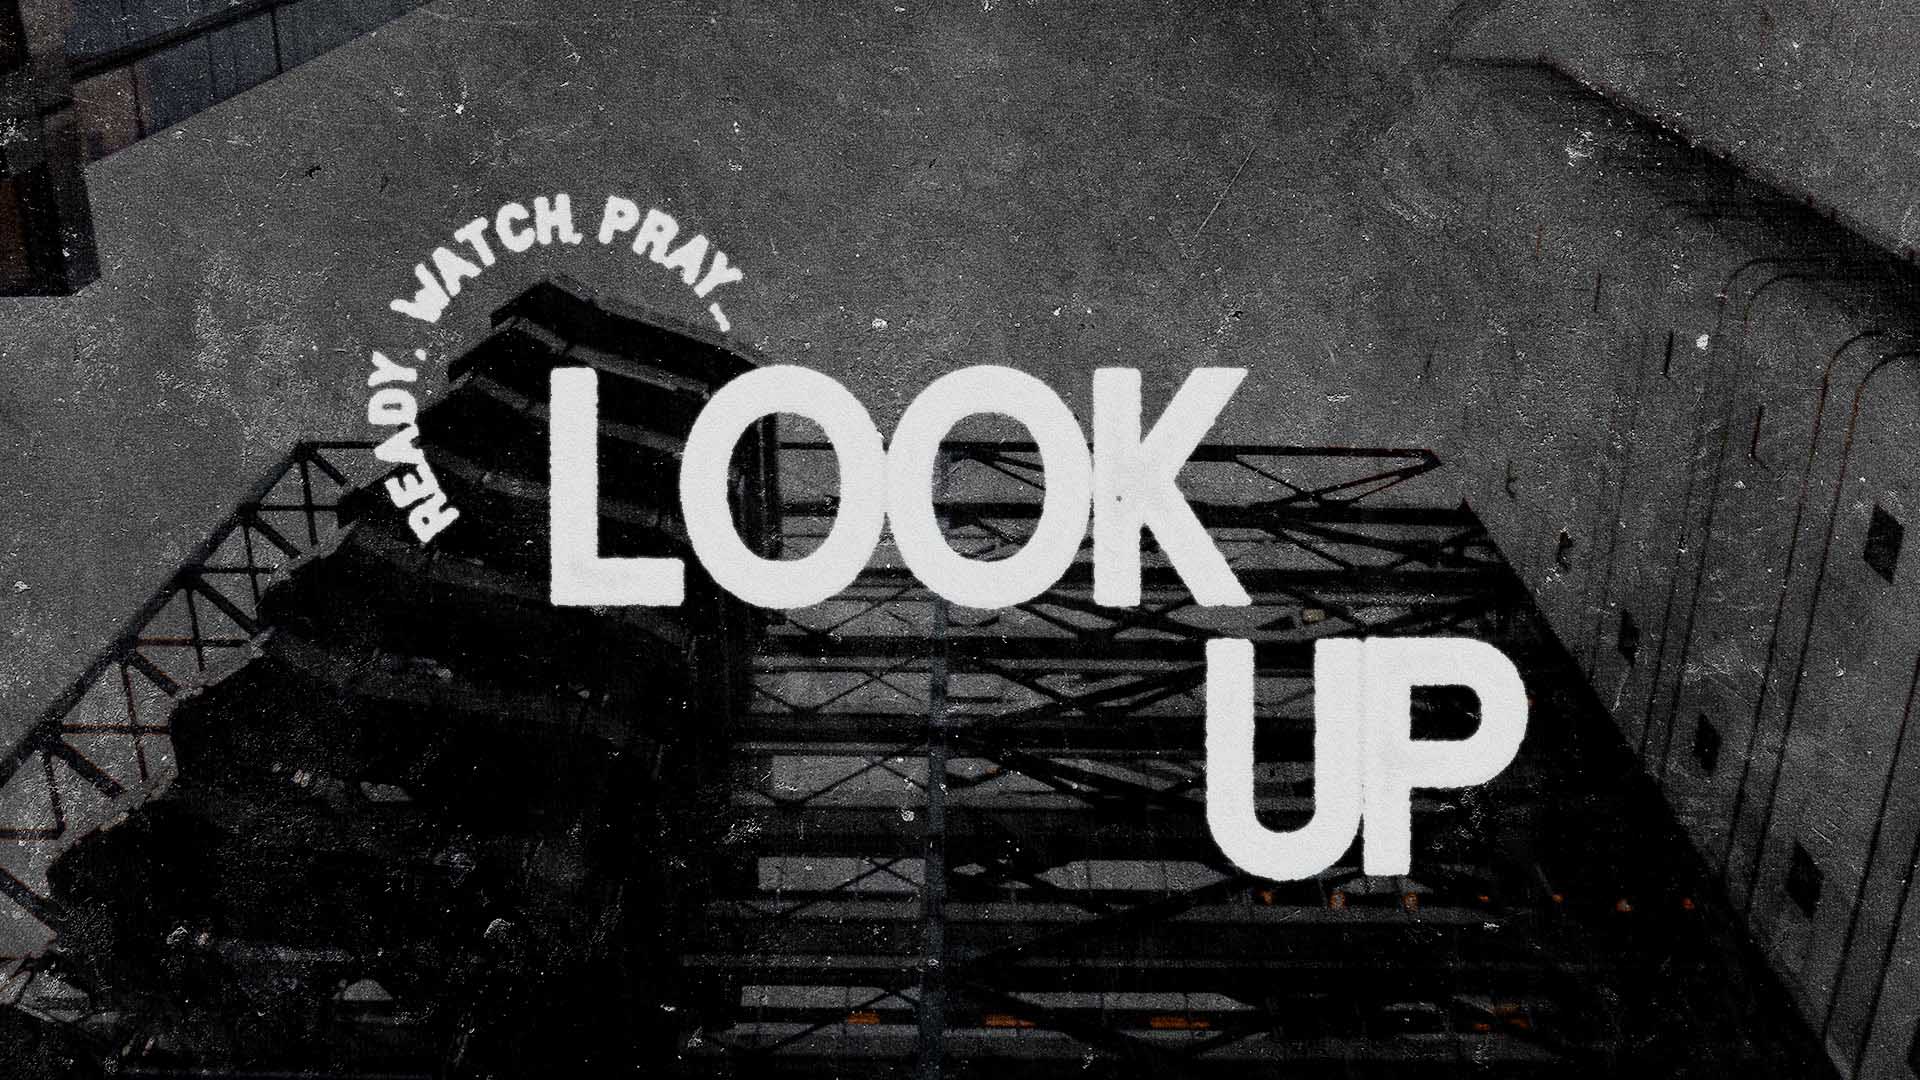 Ready, Watch, Pray… Look Up!